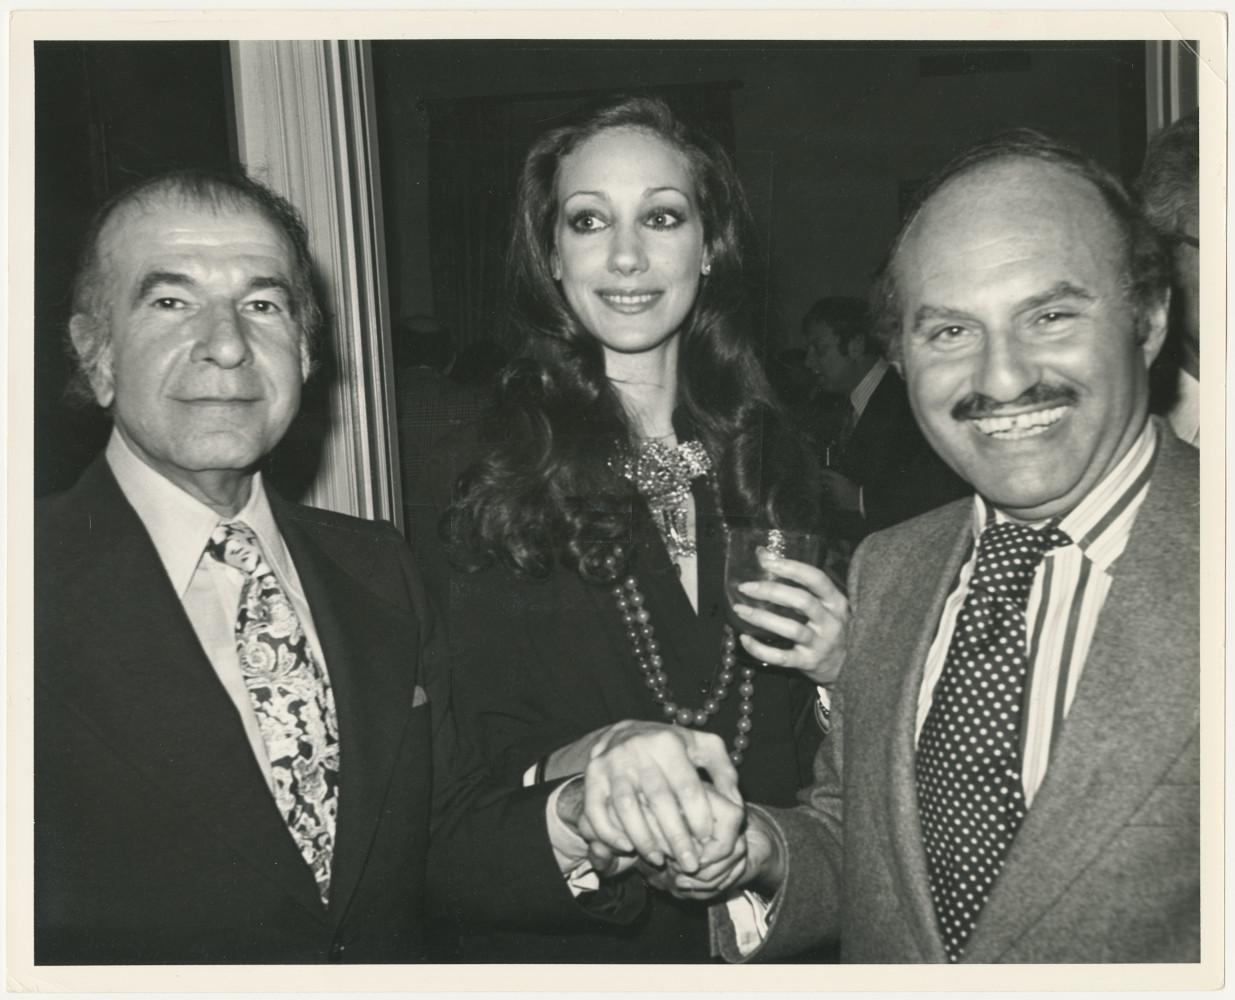 Andy Warhol Portrait Photograph - Iranian Ambassador Hoveyda, Marisa Berenson, Lester Persky